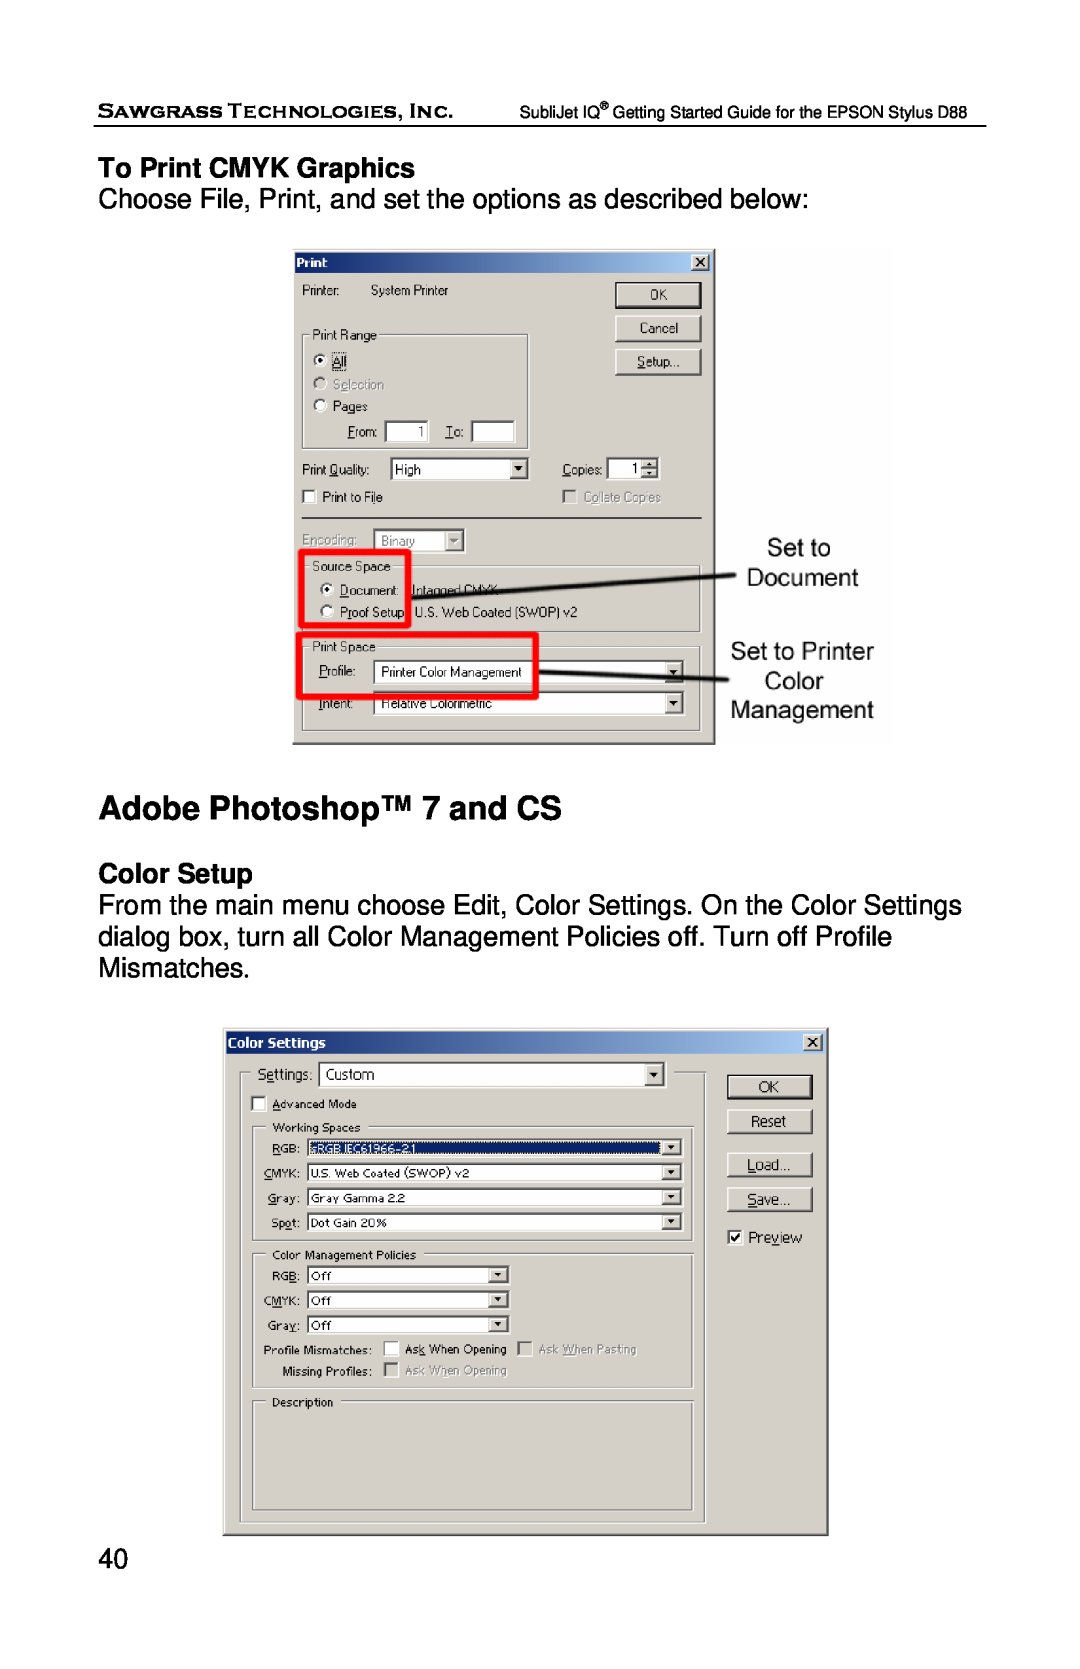 Epson D88 manual Adobe Photoshop 7 and CS, To Print CMYK Graphics, Color Setup 